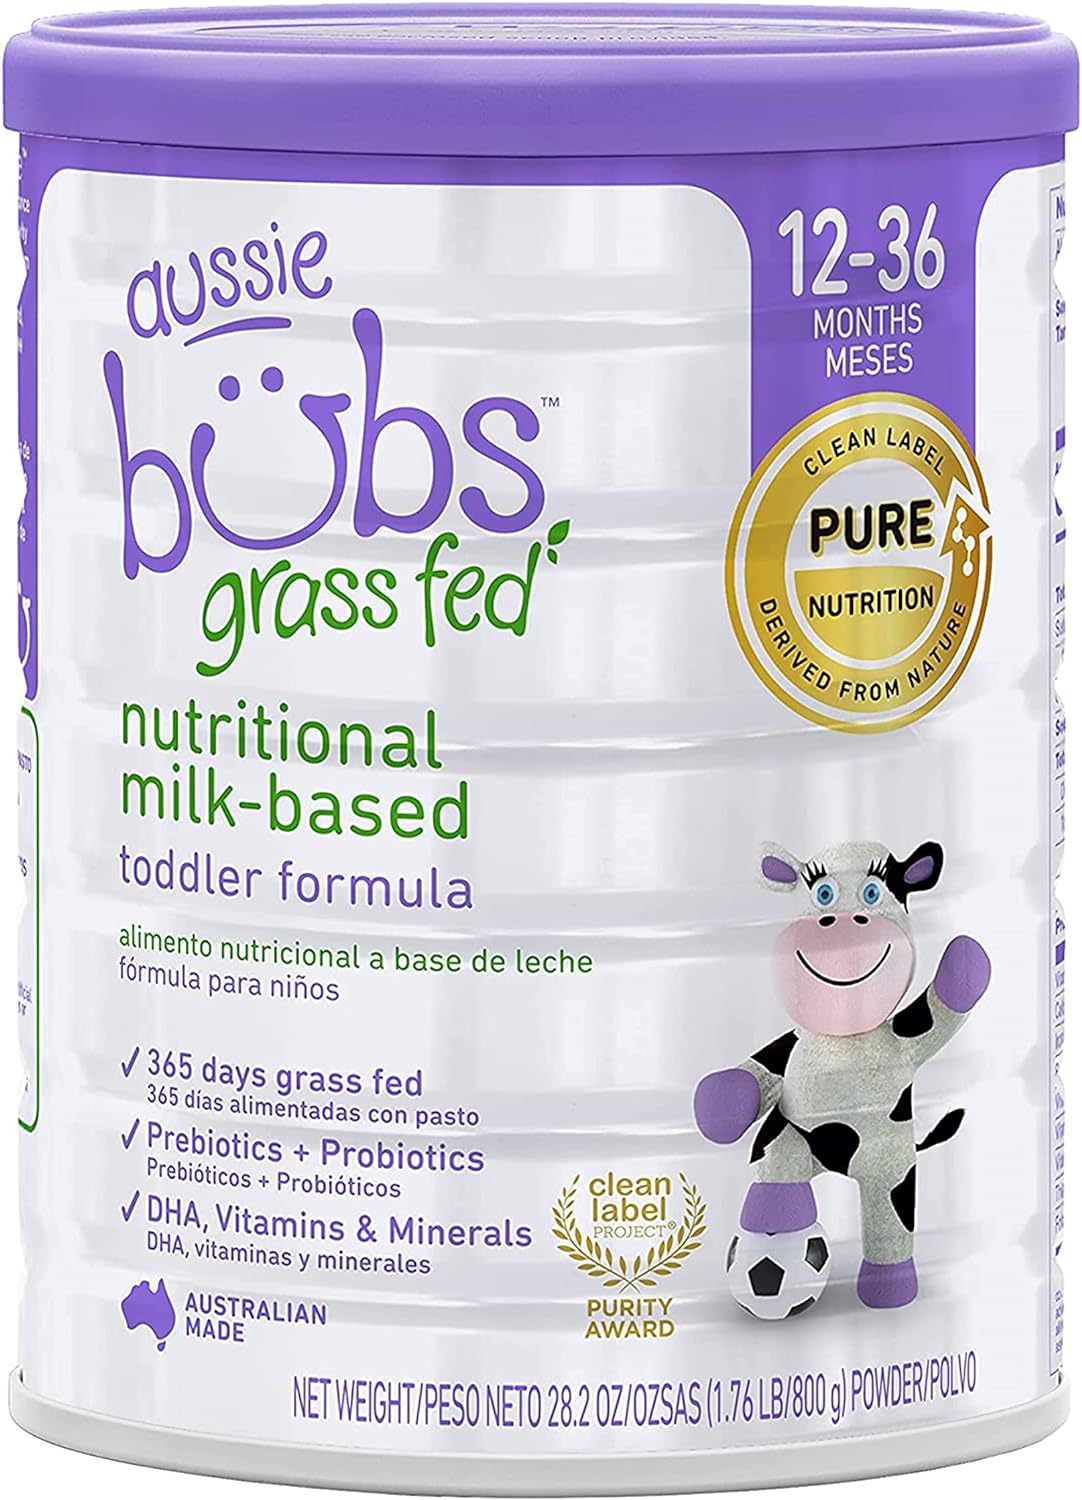 Aussie Bubs Grass Fed Nutritional Milk-Based Toddler Formula